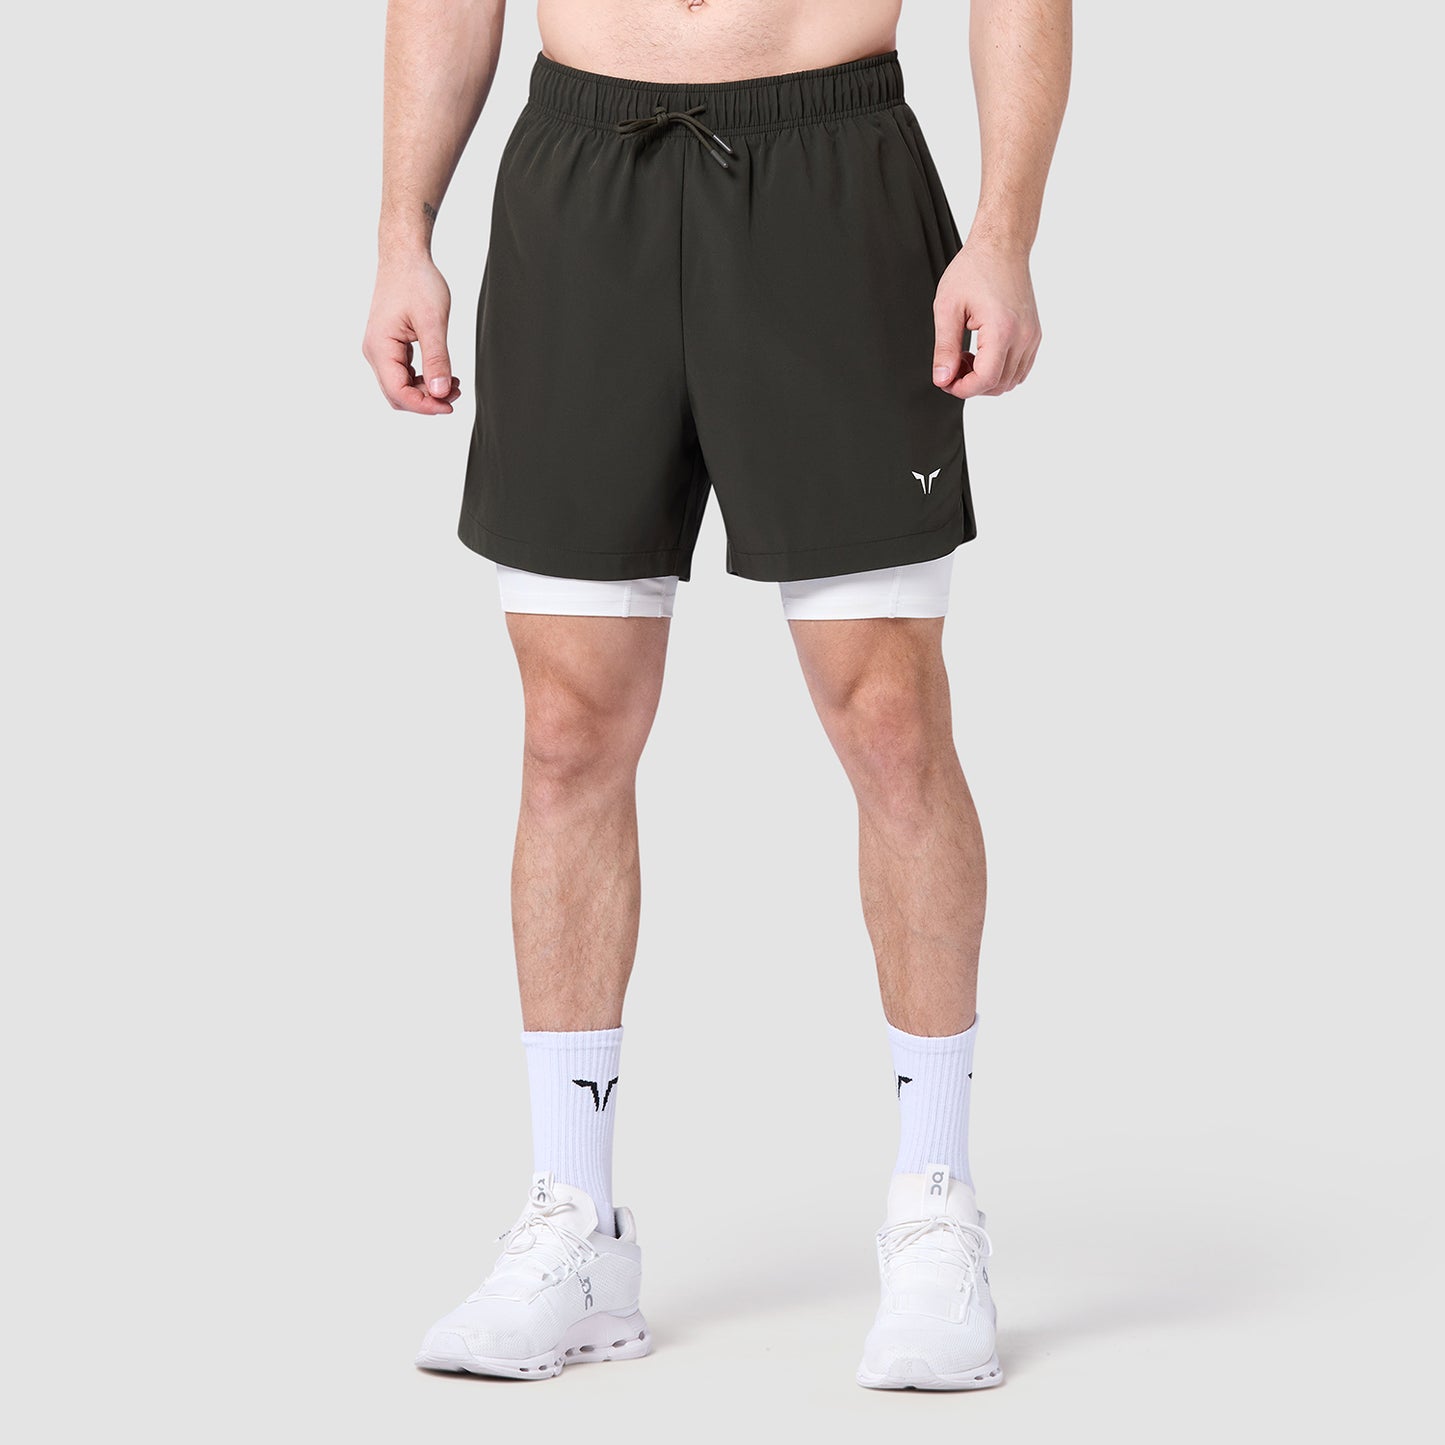 Limitless 2-In-1 7" Shorts - Khaki